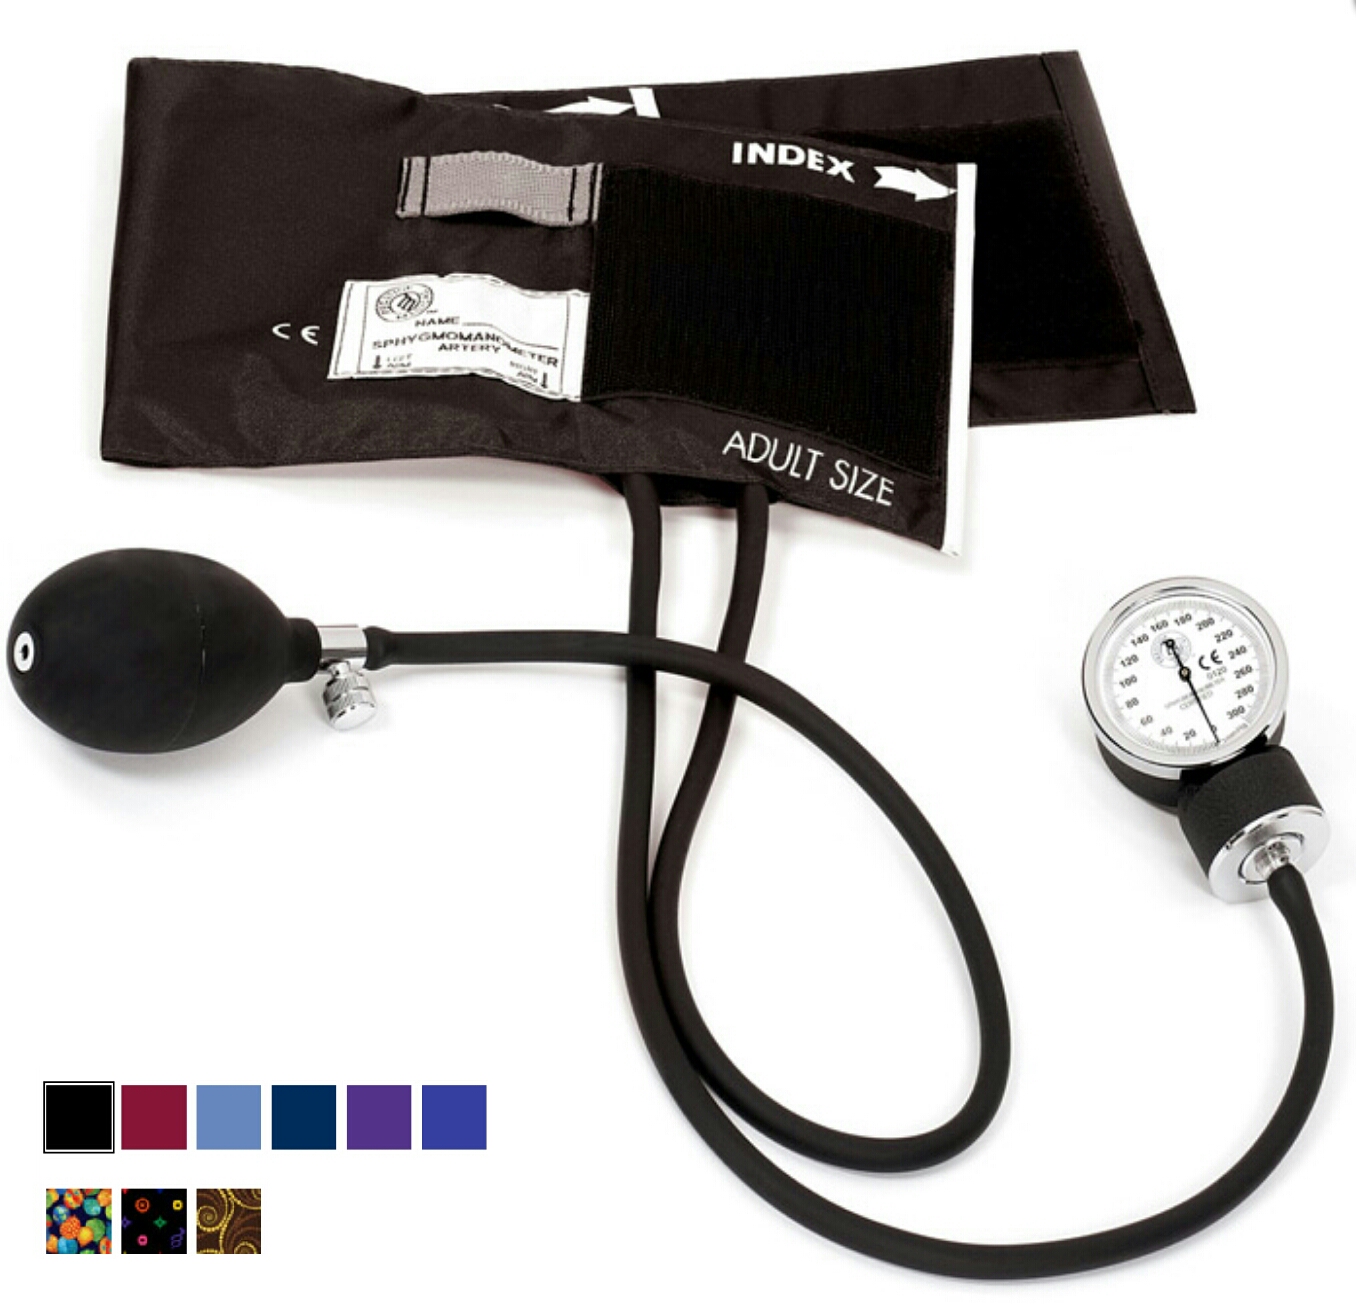 Professional Blood Pressure Monitor Supplies